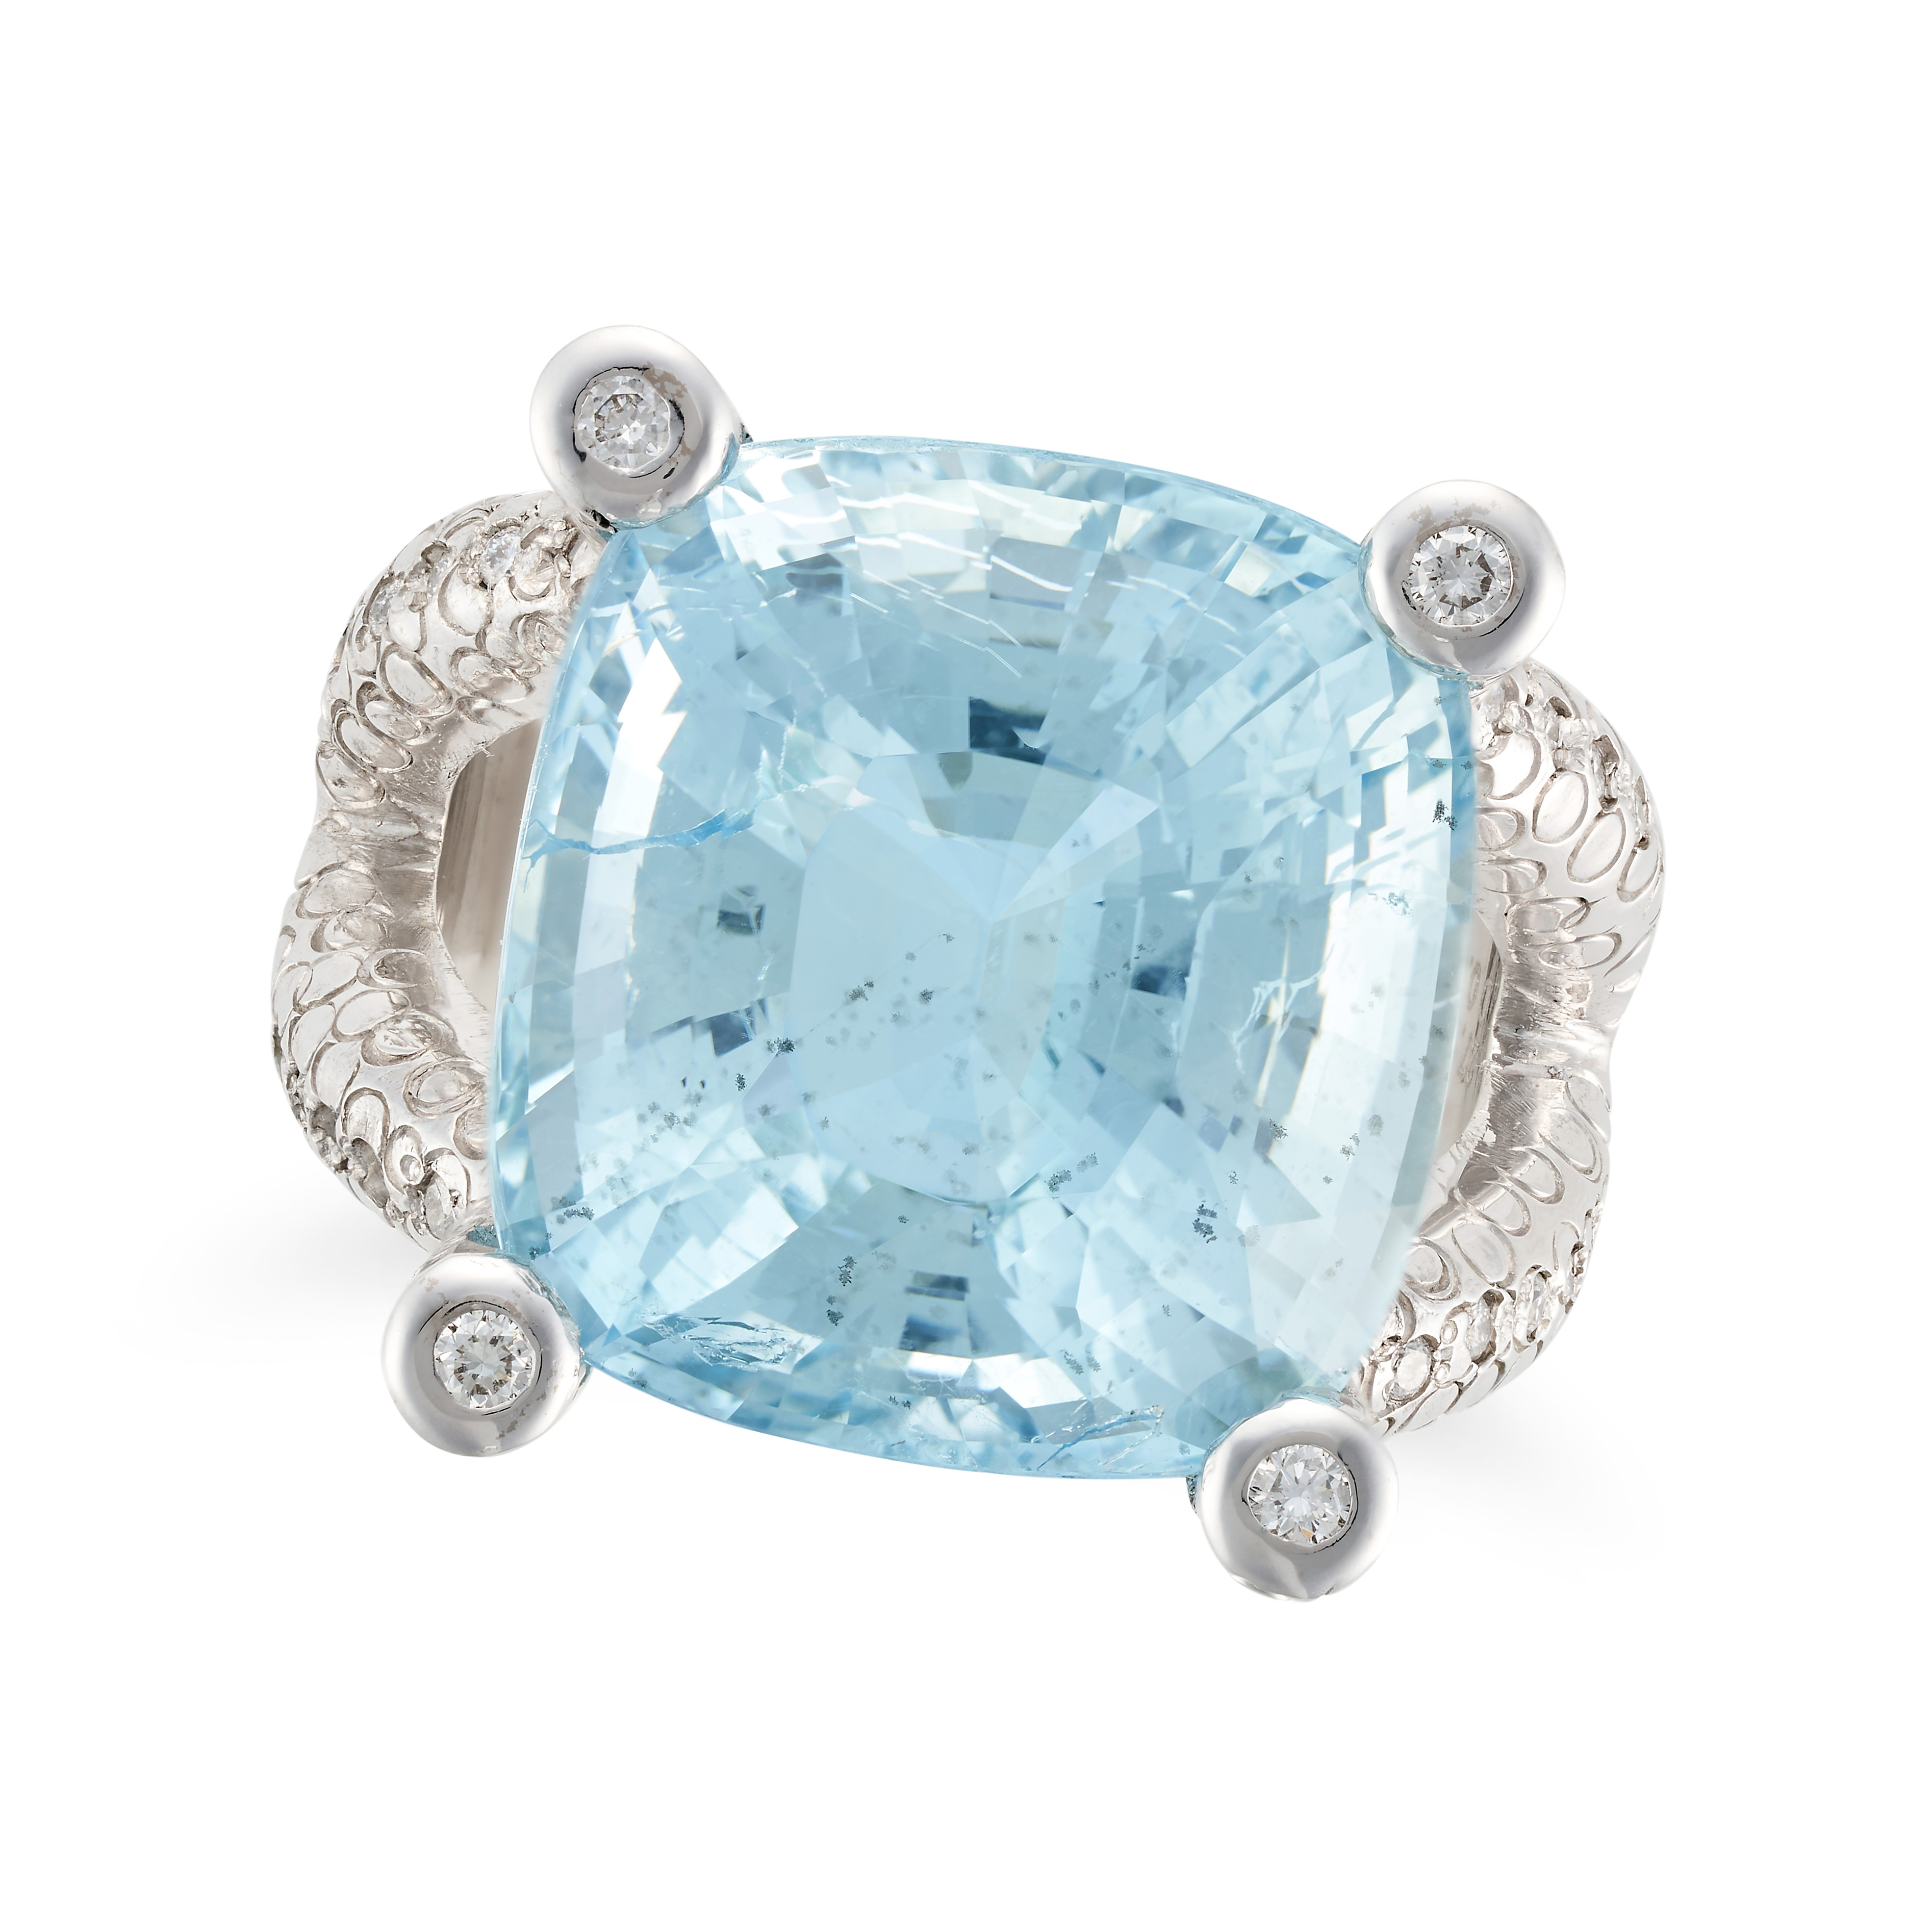 AN AQUAMARINE AND DIAMOND RING set with a cushion cut aquamarine of 27.50 carats, the stylised mo...